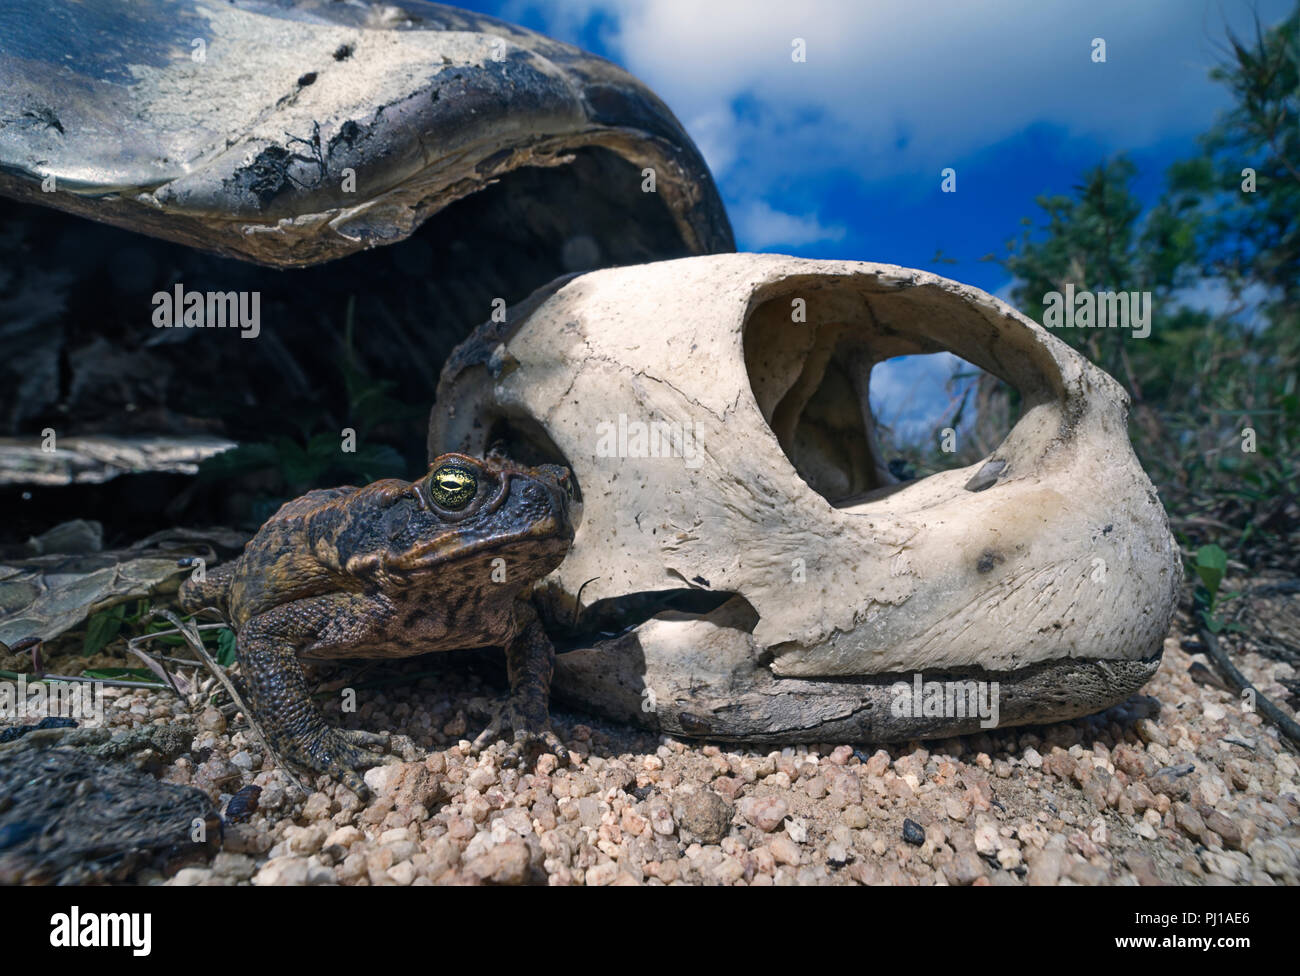 Cane toad (Rhinella marina) next to the skeleton of a green turtle (Chelonia mydas), North Queensland, Australia Stock Photo